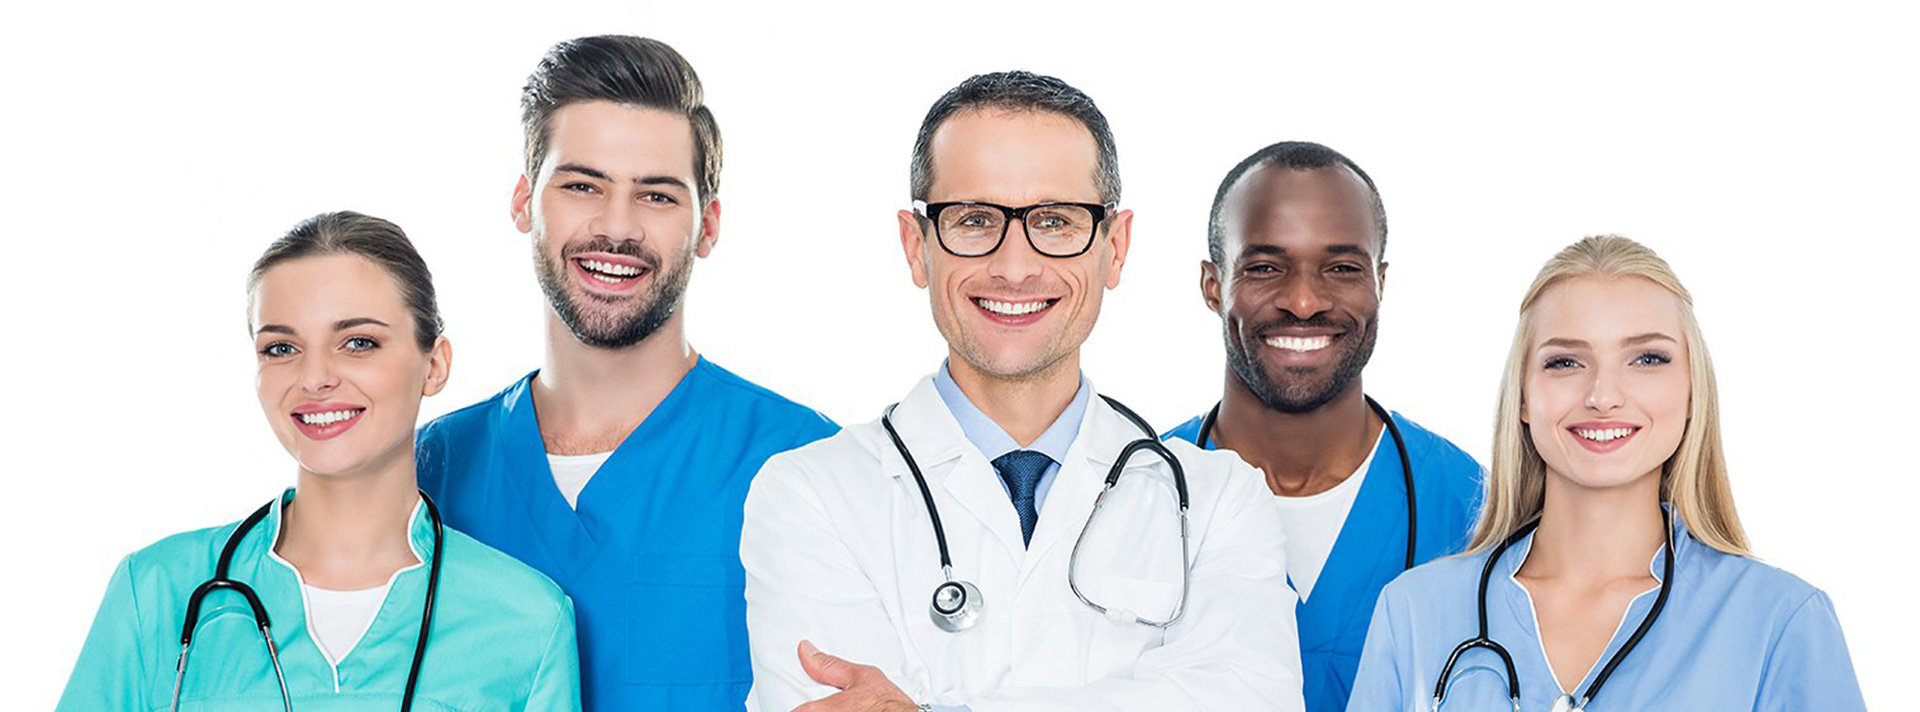 Medical Marijuana Doctors in Dade City North, Florida 33525